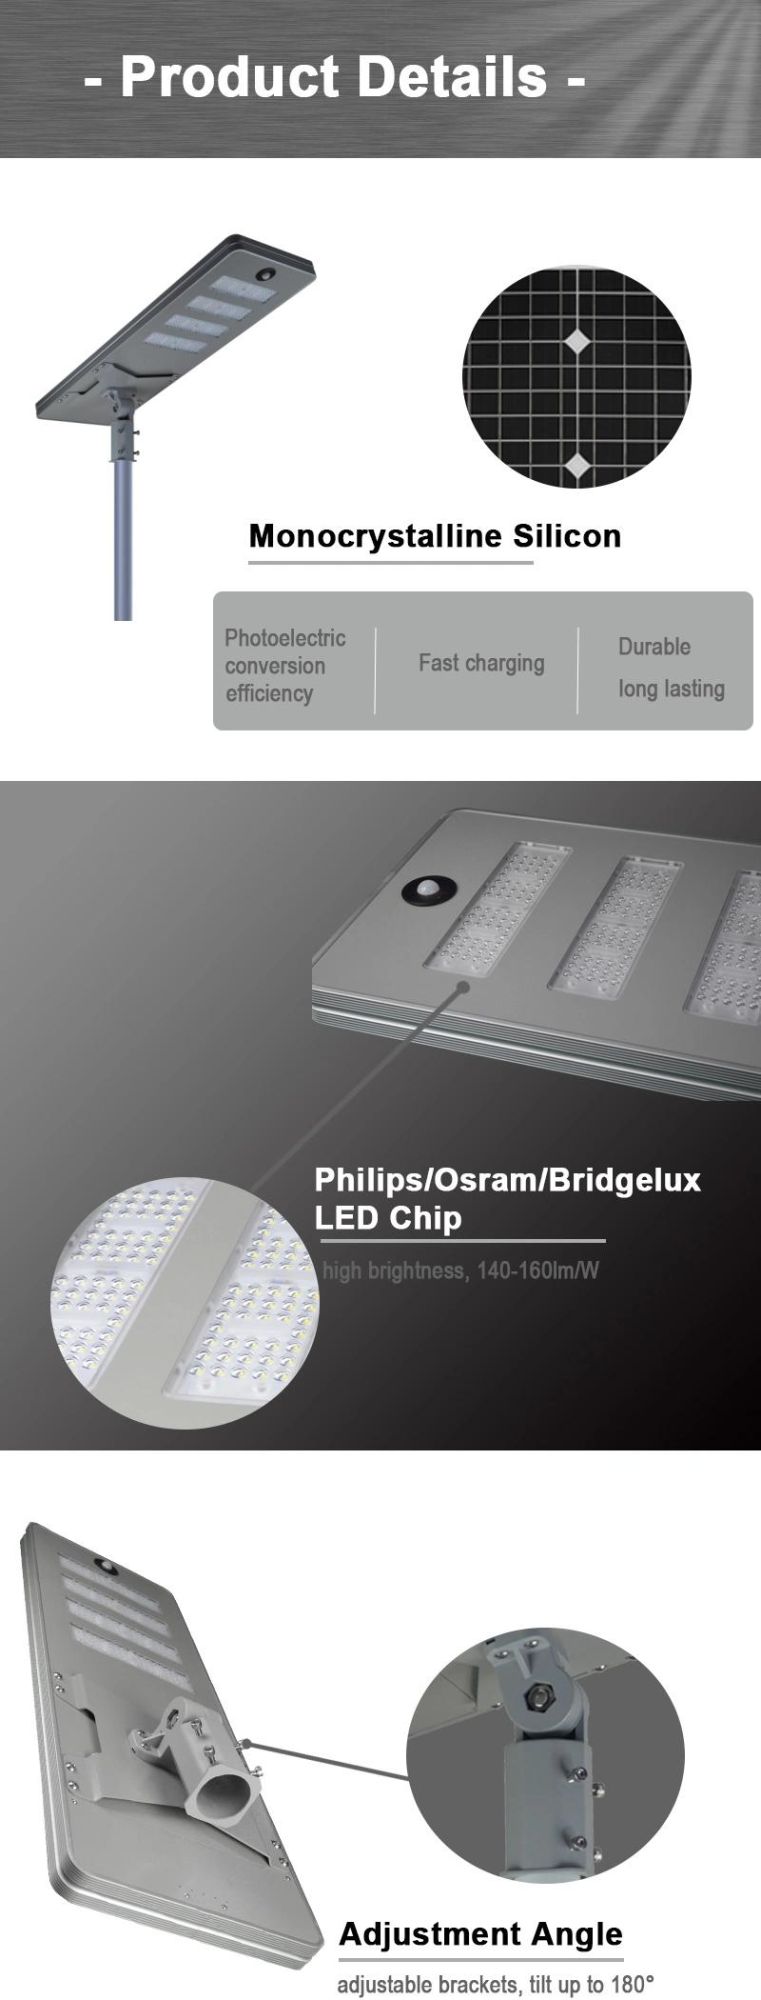 100W/120W/150W/200watts PIR/Microwave Induction Solar Streetgarden/Road Light/Lamp Lamparas LED